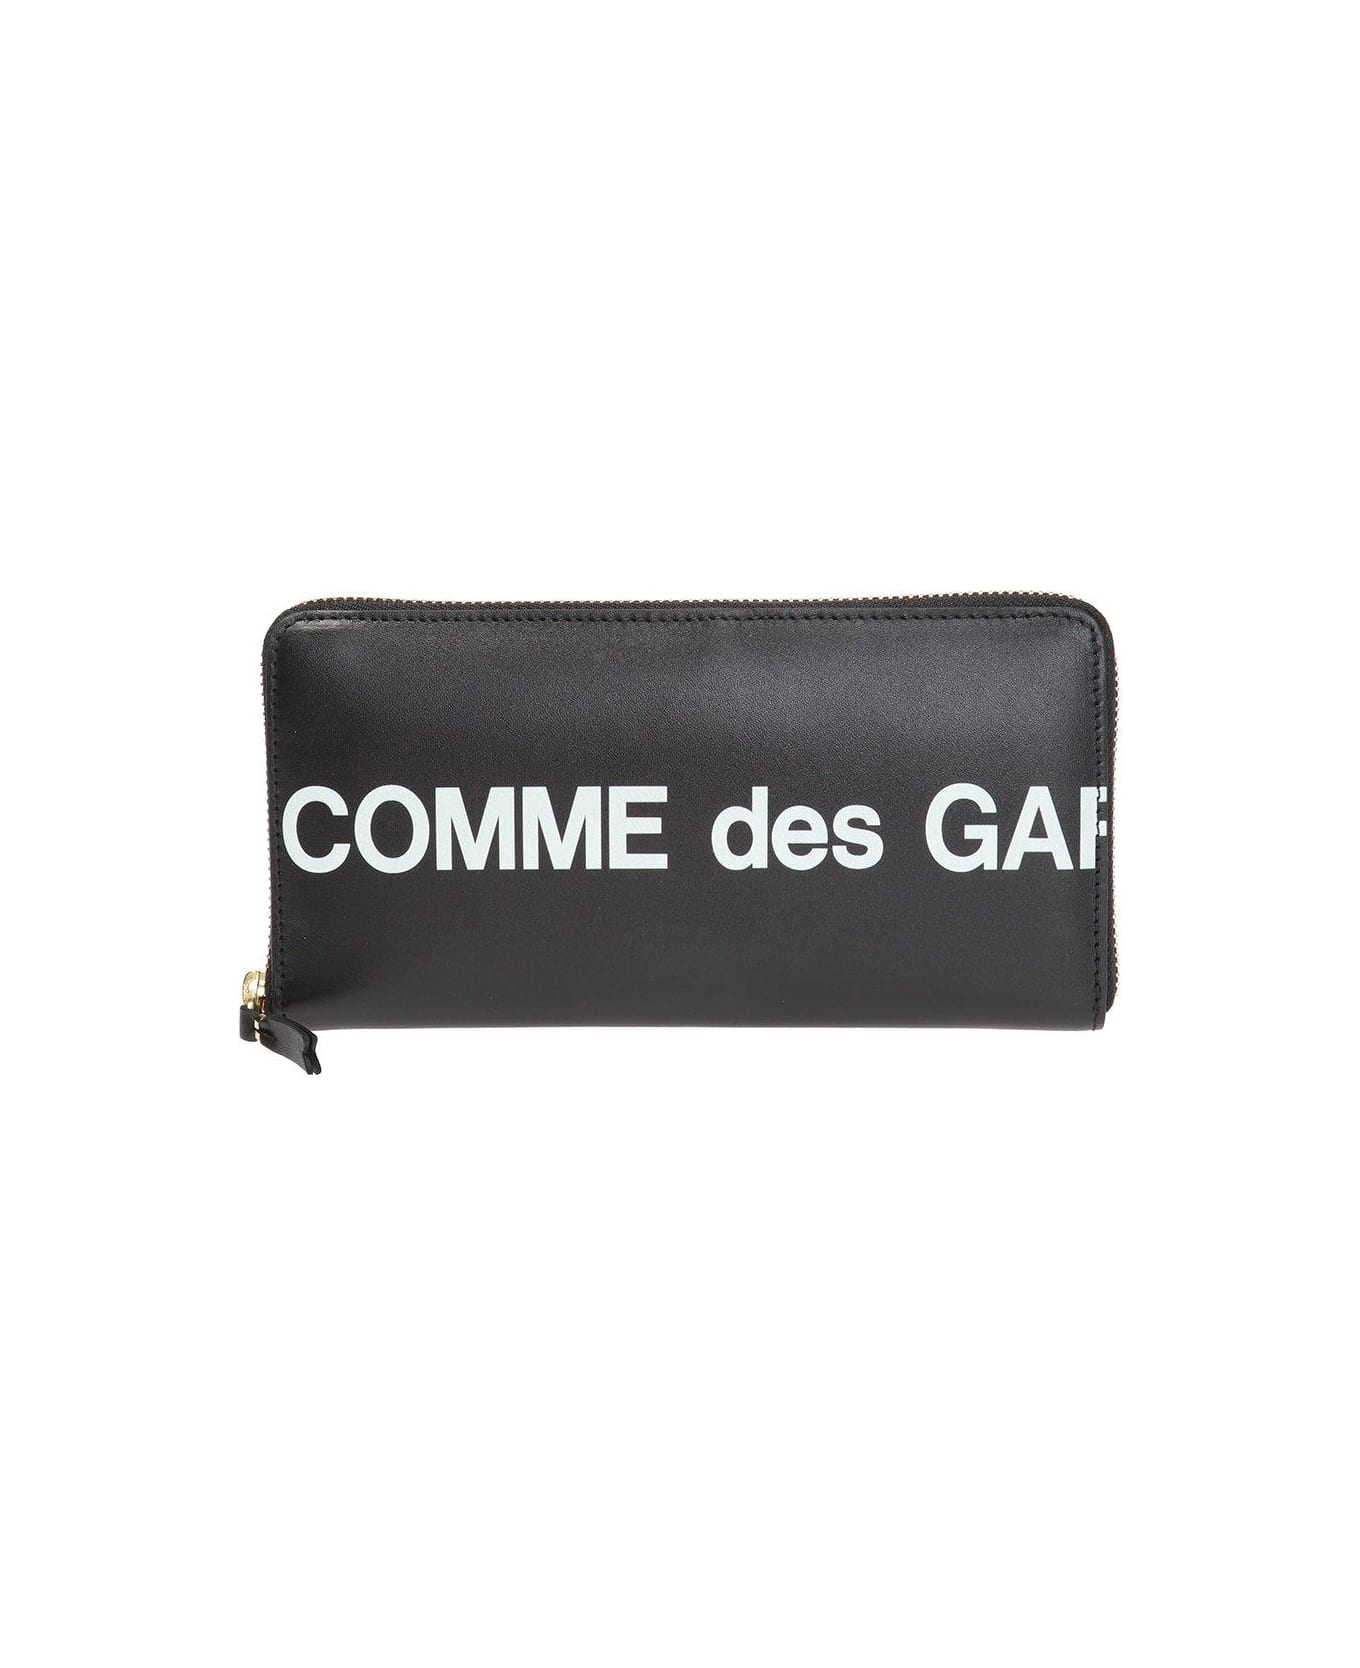 Comme des Garçons Wallet Logo Printed Zipped Wallet